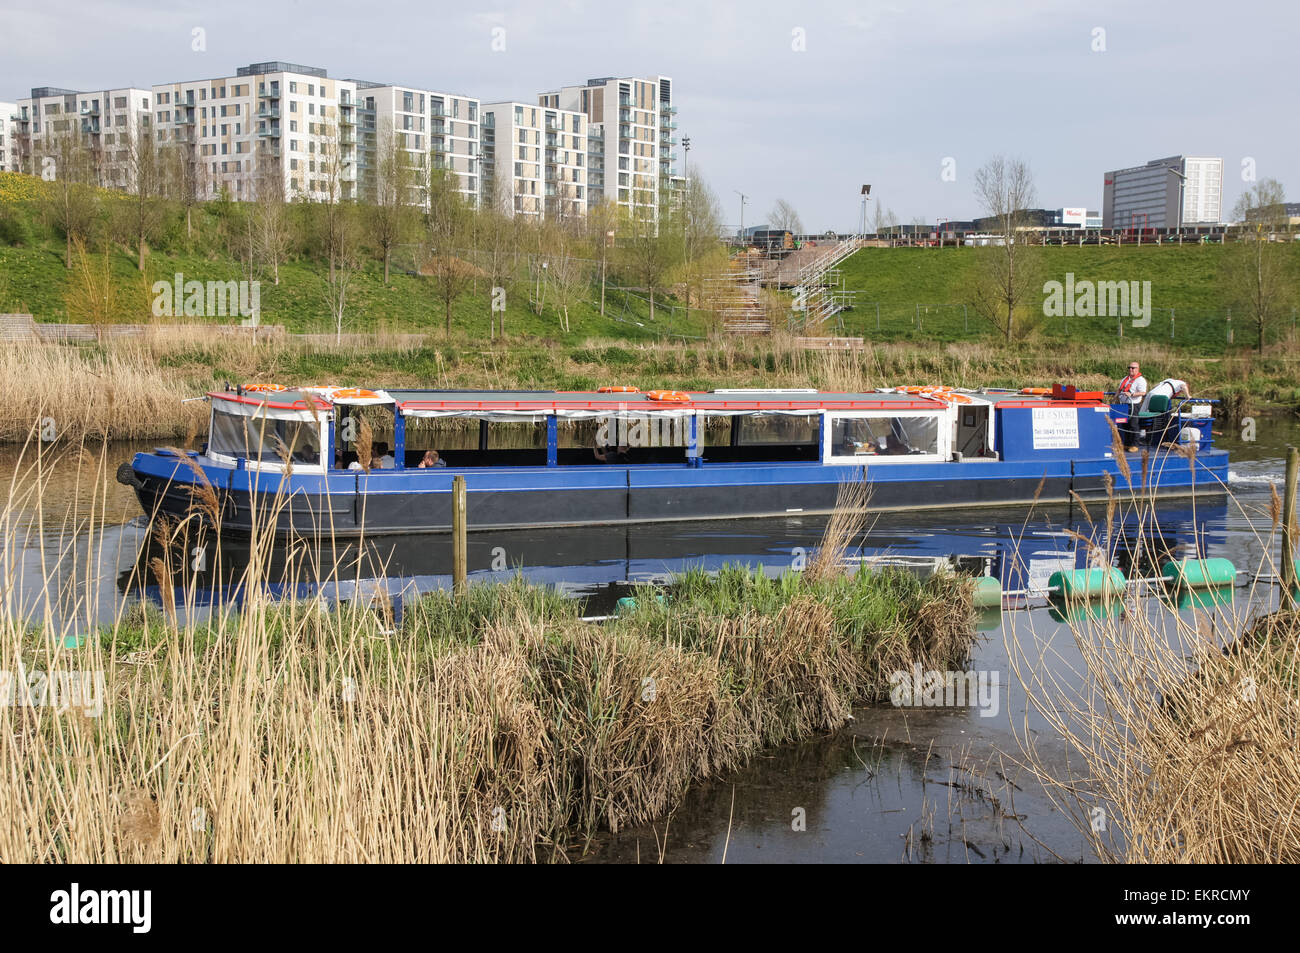 Boat tour on the River Lea near Stratford, London England United Kingdom UK Stock Photo